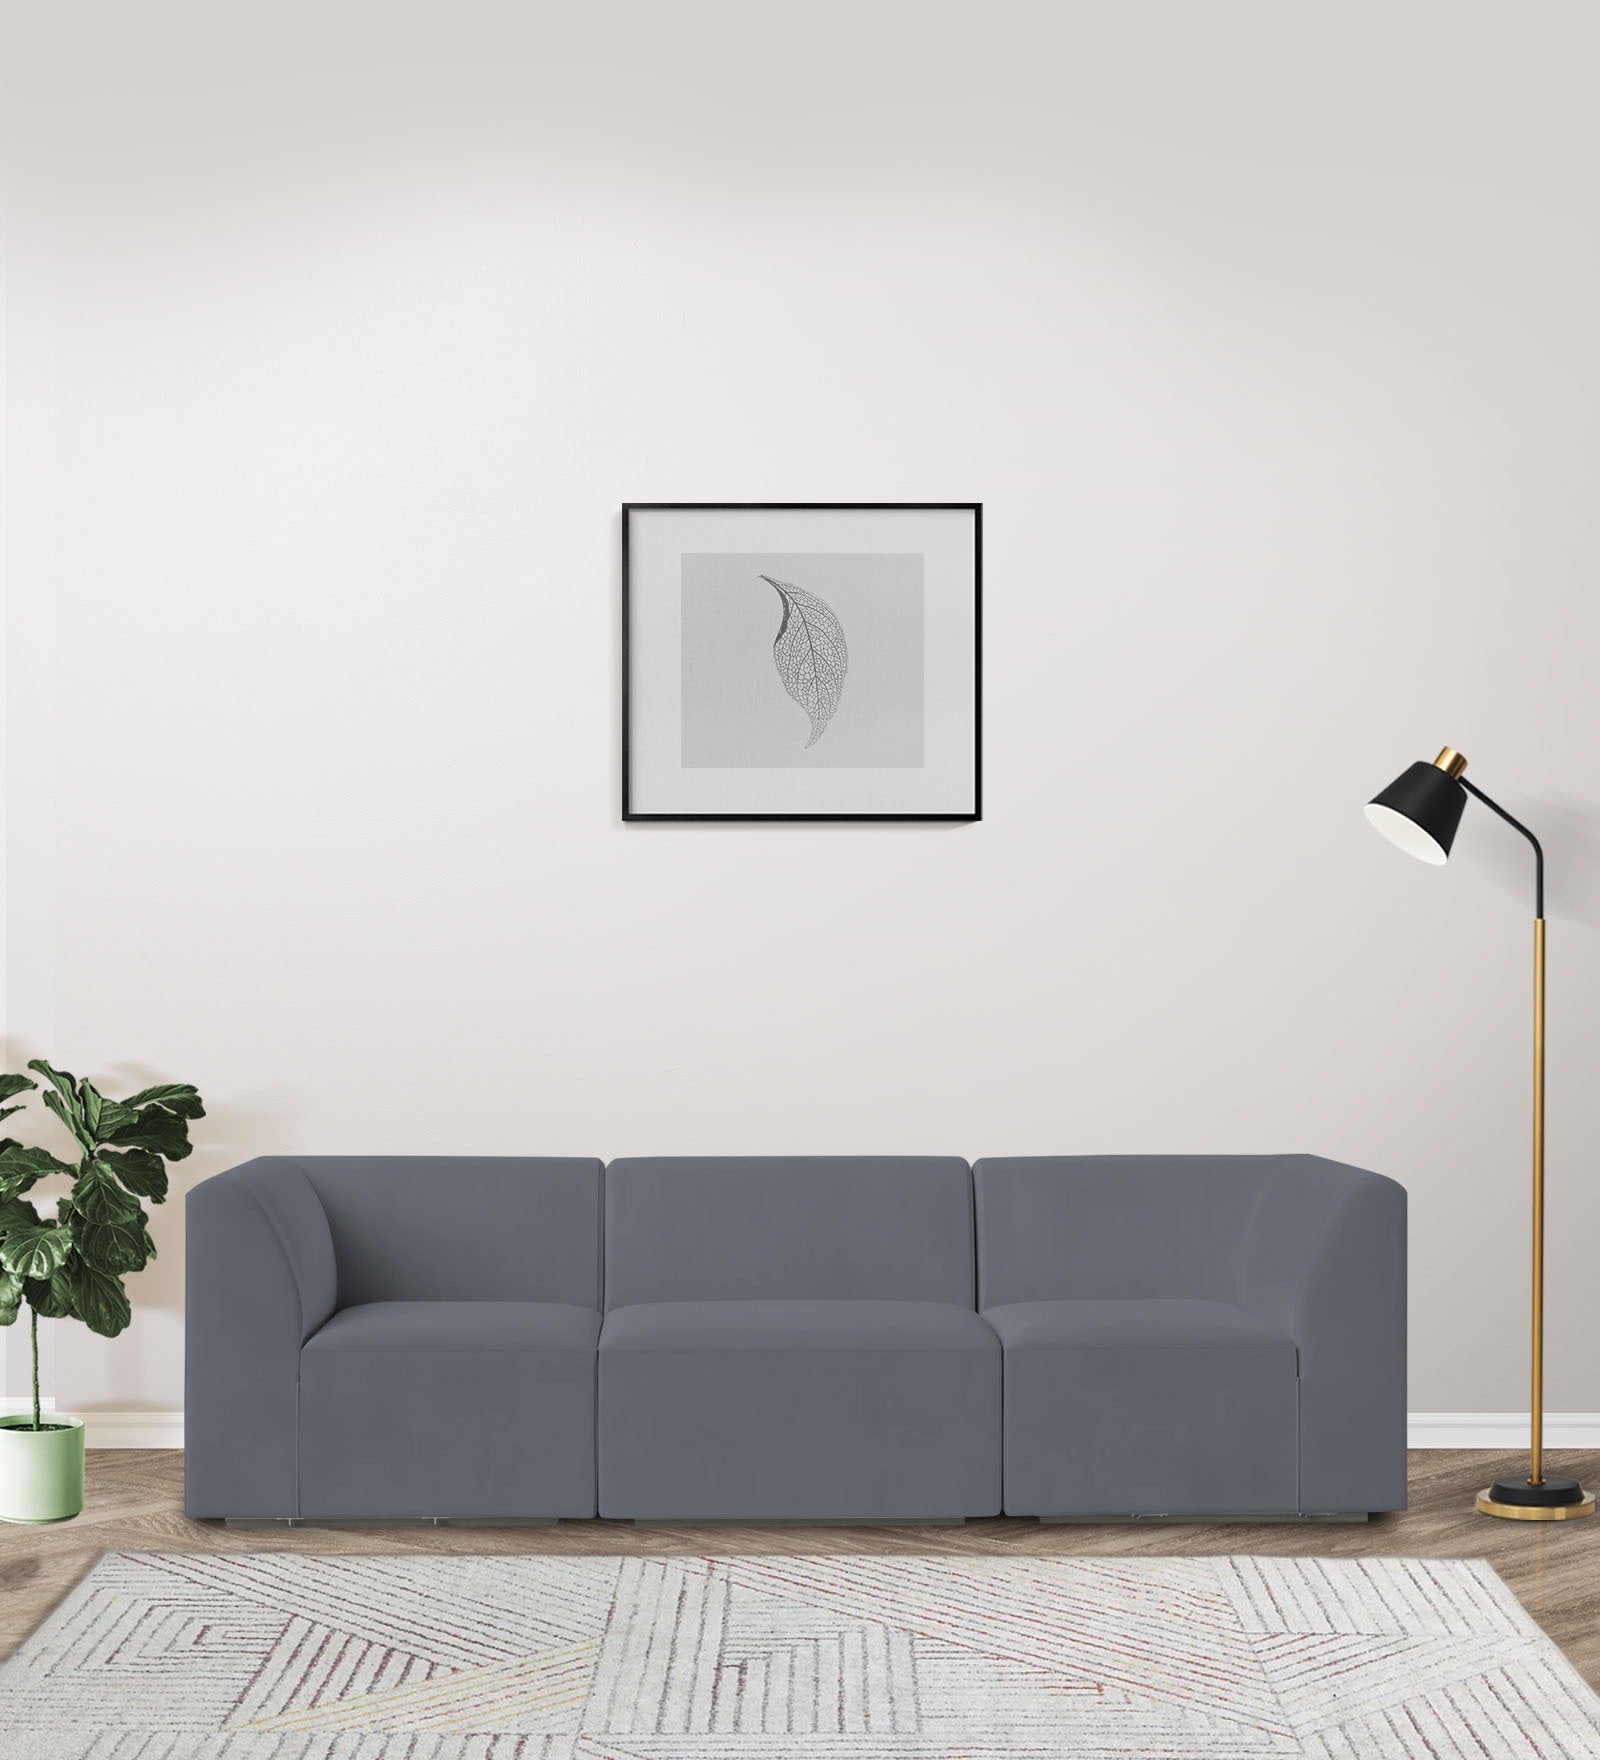 Bufa Velvet 3 Seater Sofa in Pubble Grey Colour